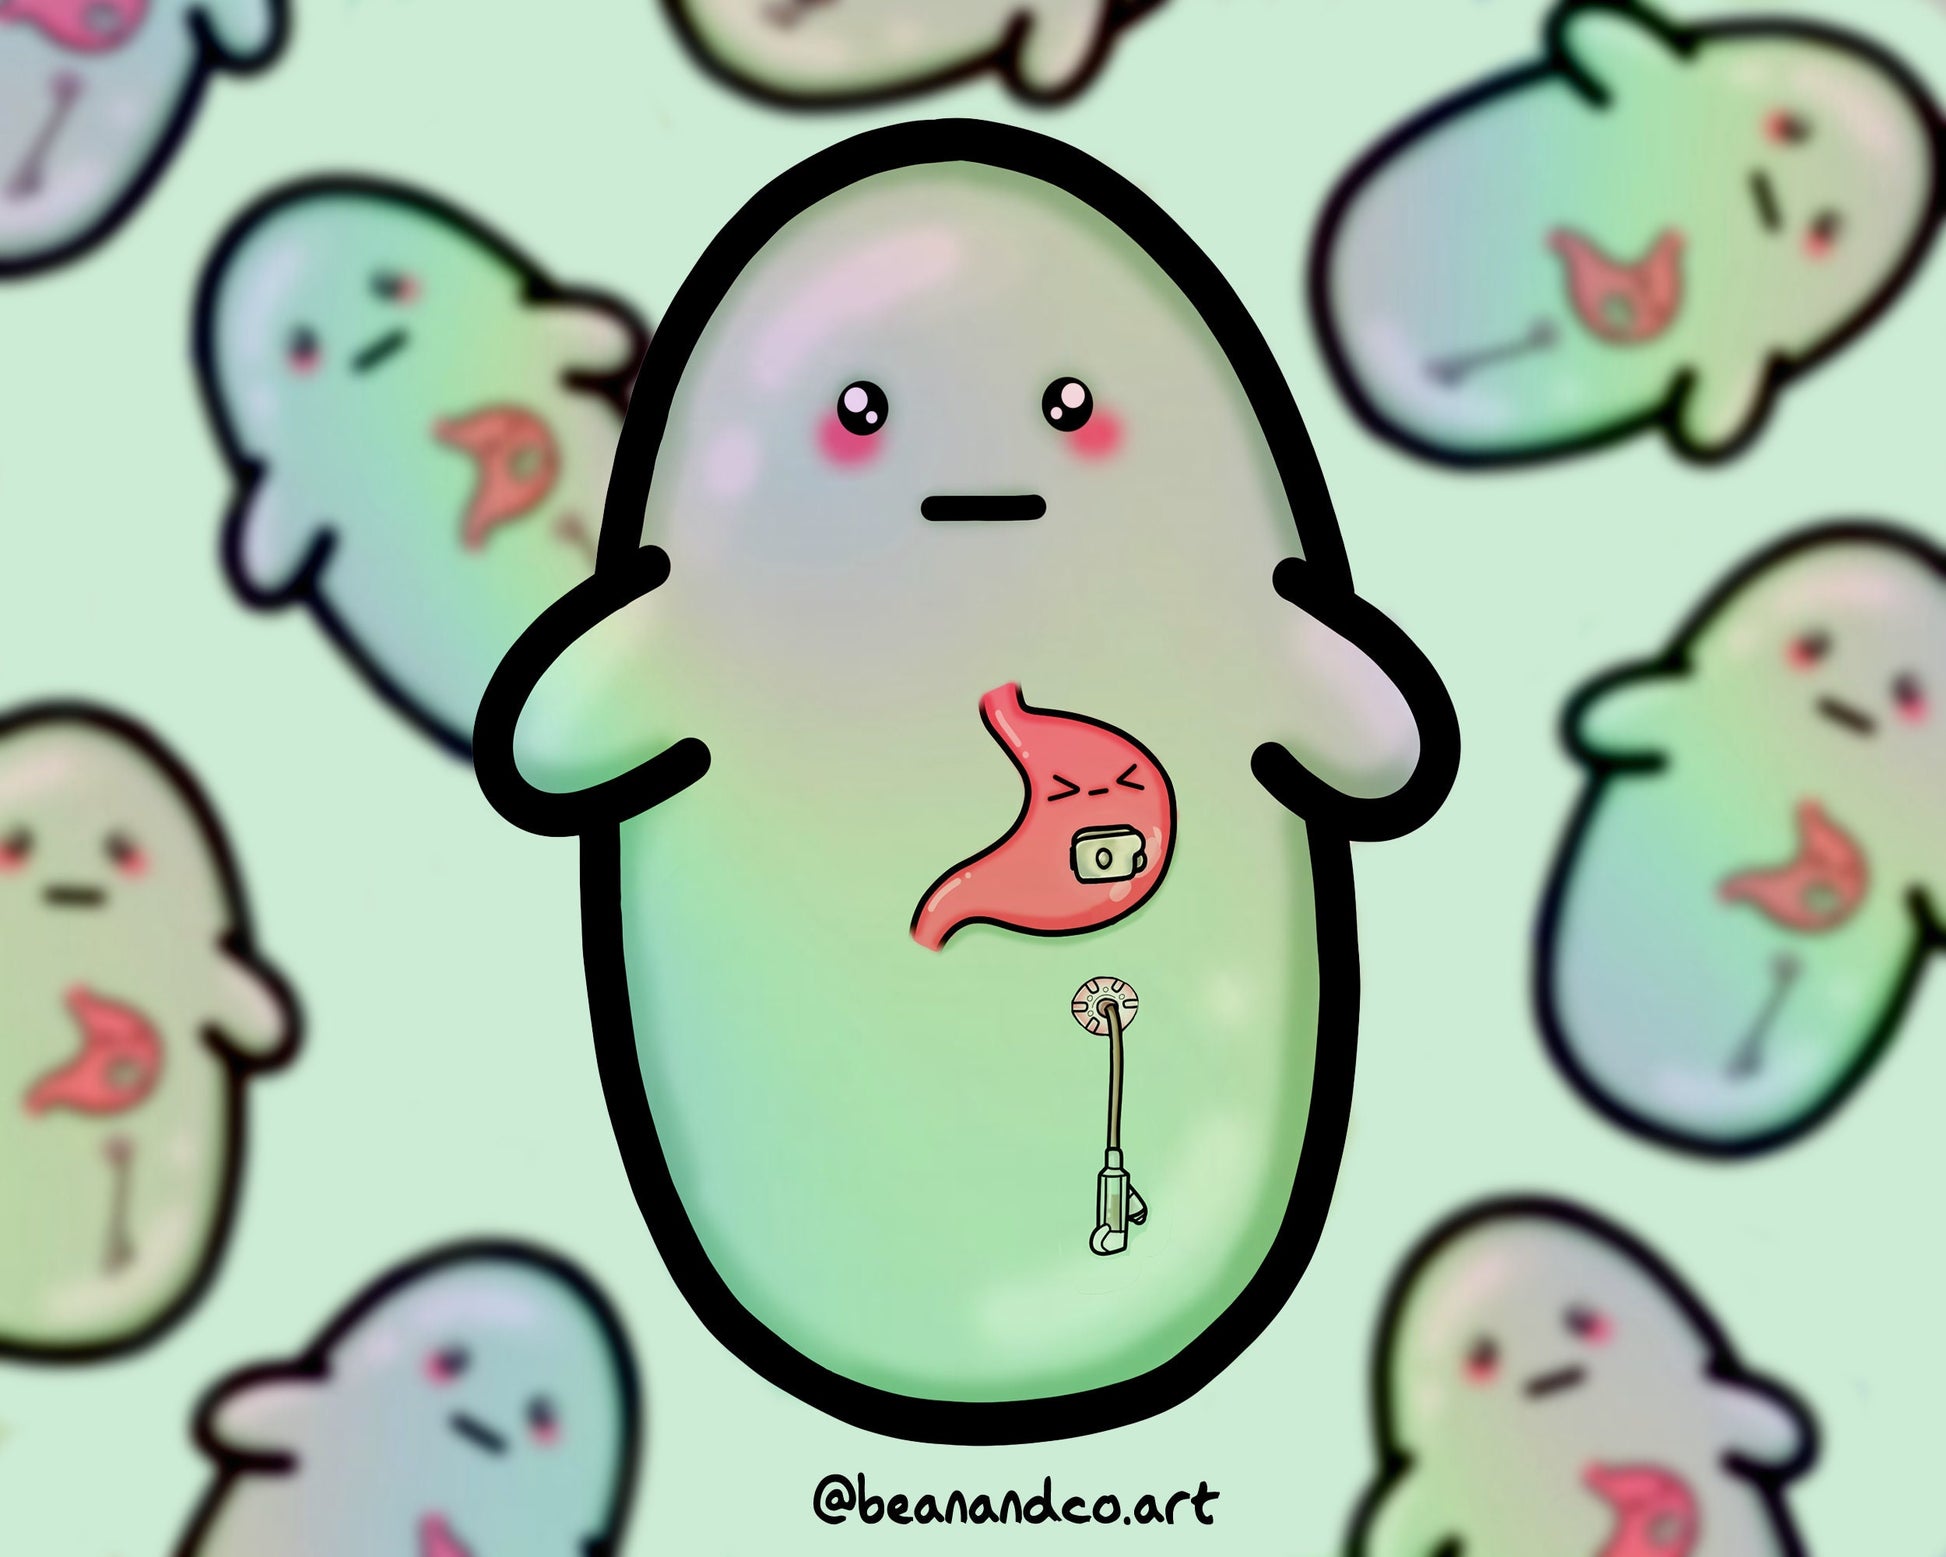 G tube button, J tube dangle bean sticker- 5cm rainbow holographic sticker- feeding tube awareness sticker- gastroparesis/ stomach problems